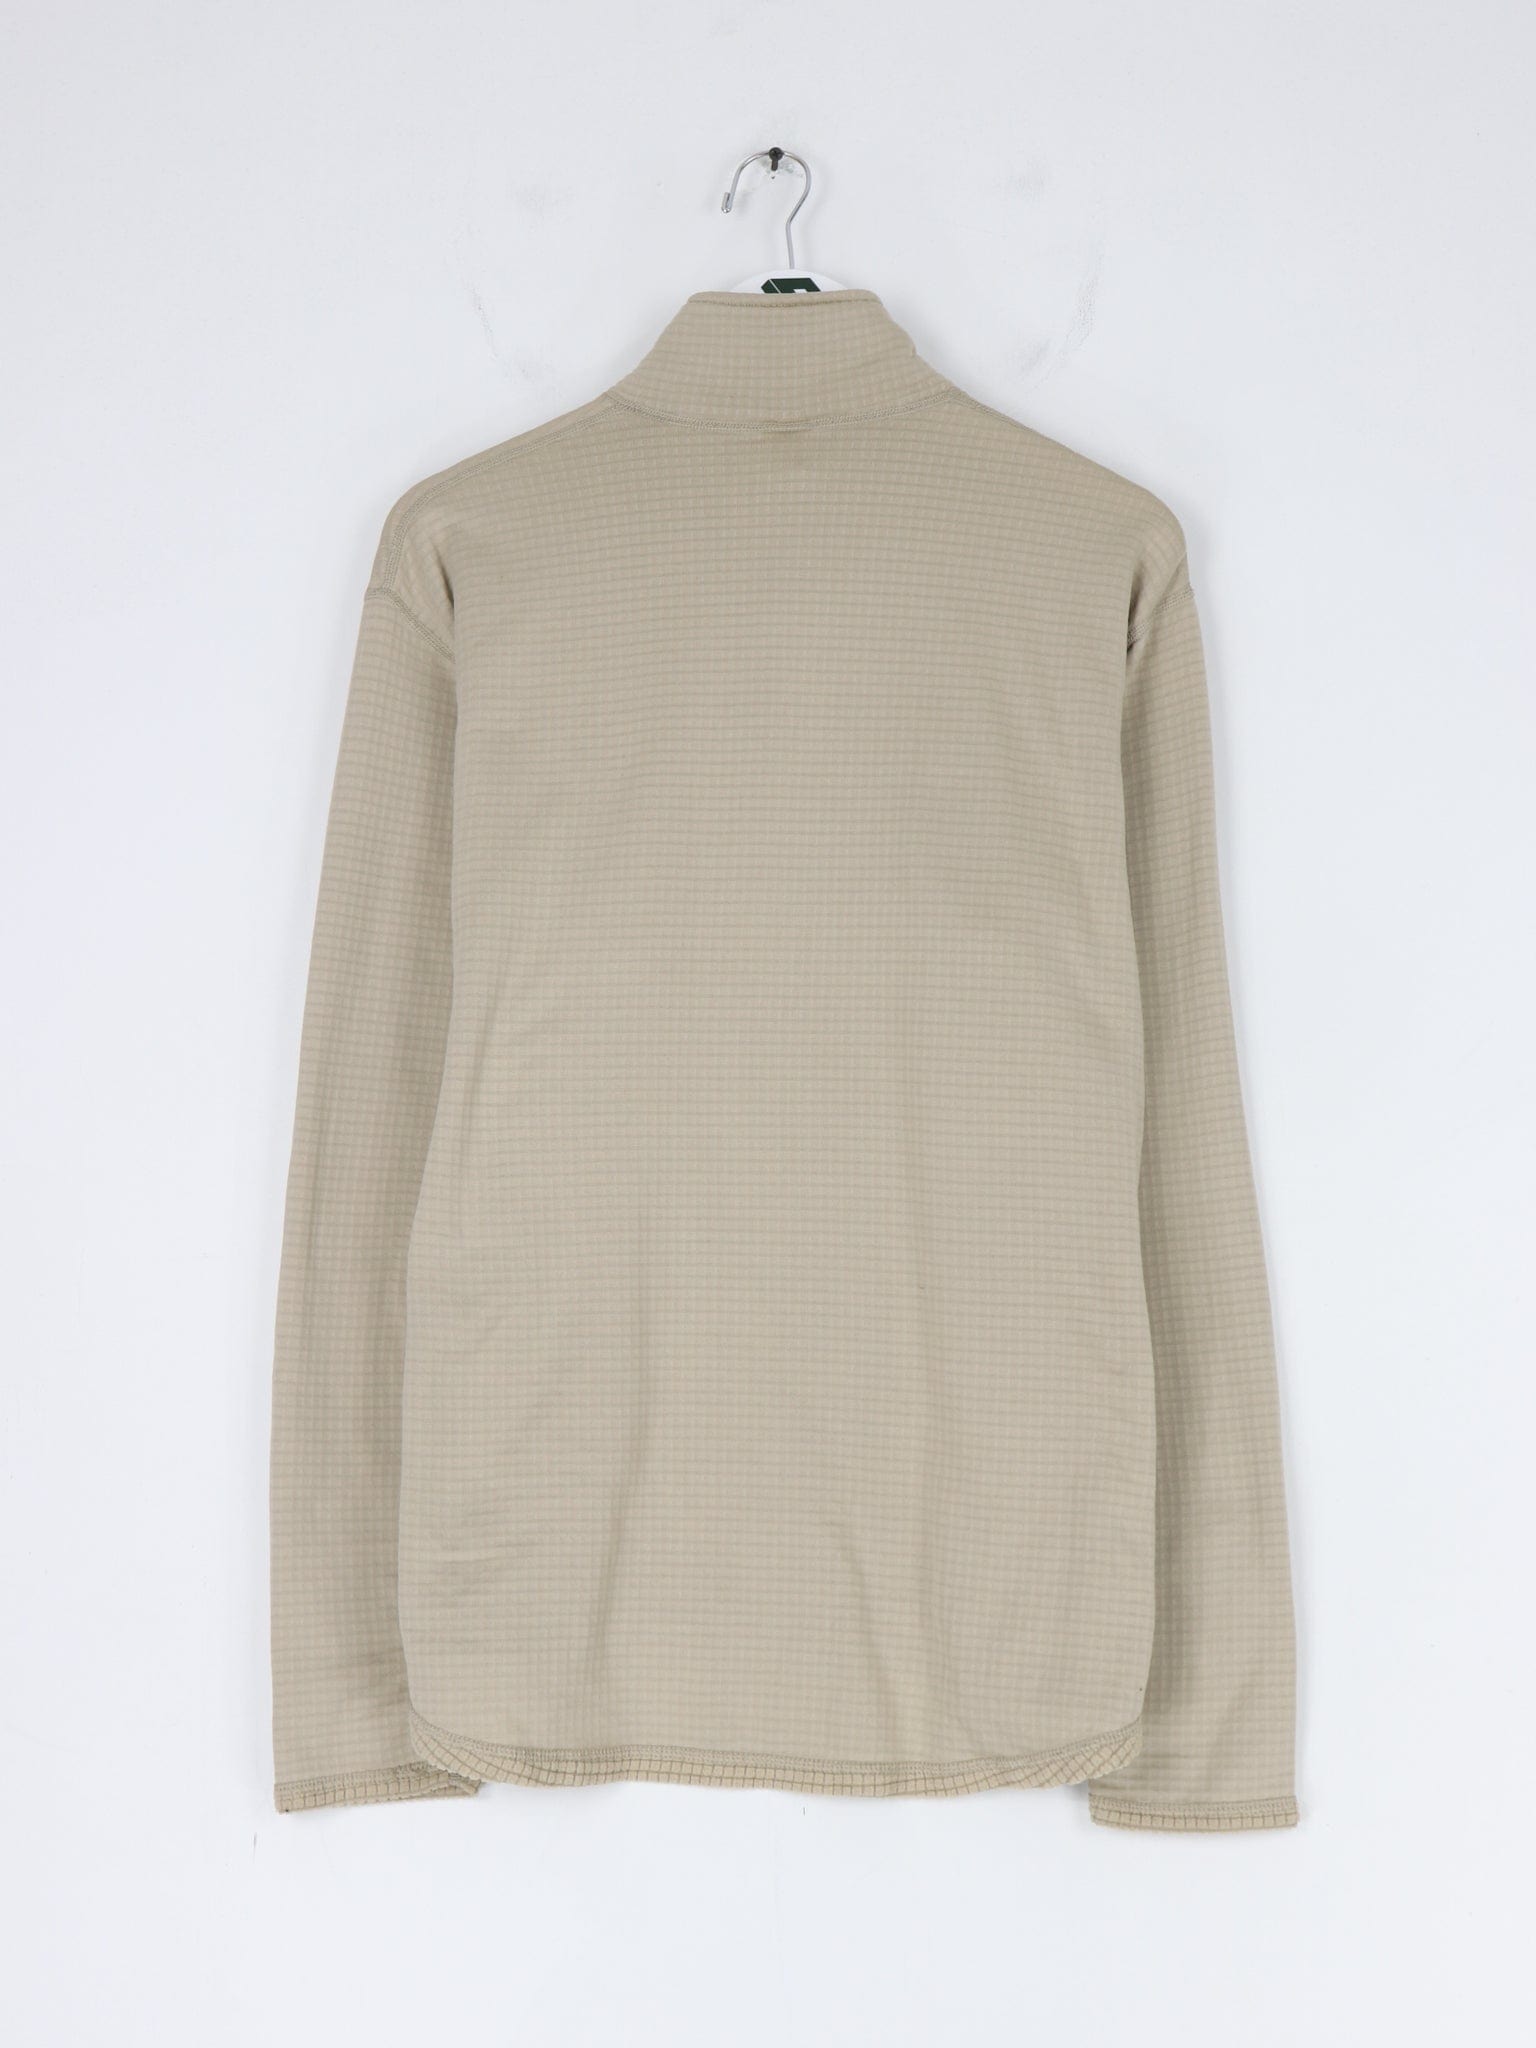 Other Sweatshirts & Hoodies Vintage Military Shirt Mens Large Brown Cold Weather Army Quarter Zip Sweatshirt